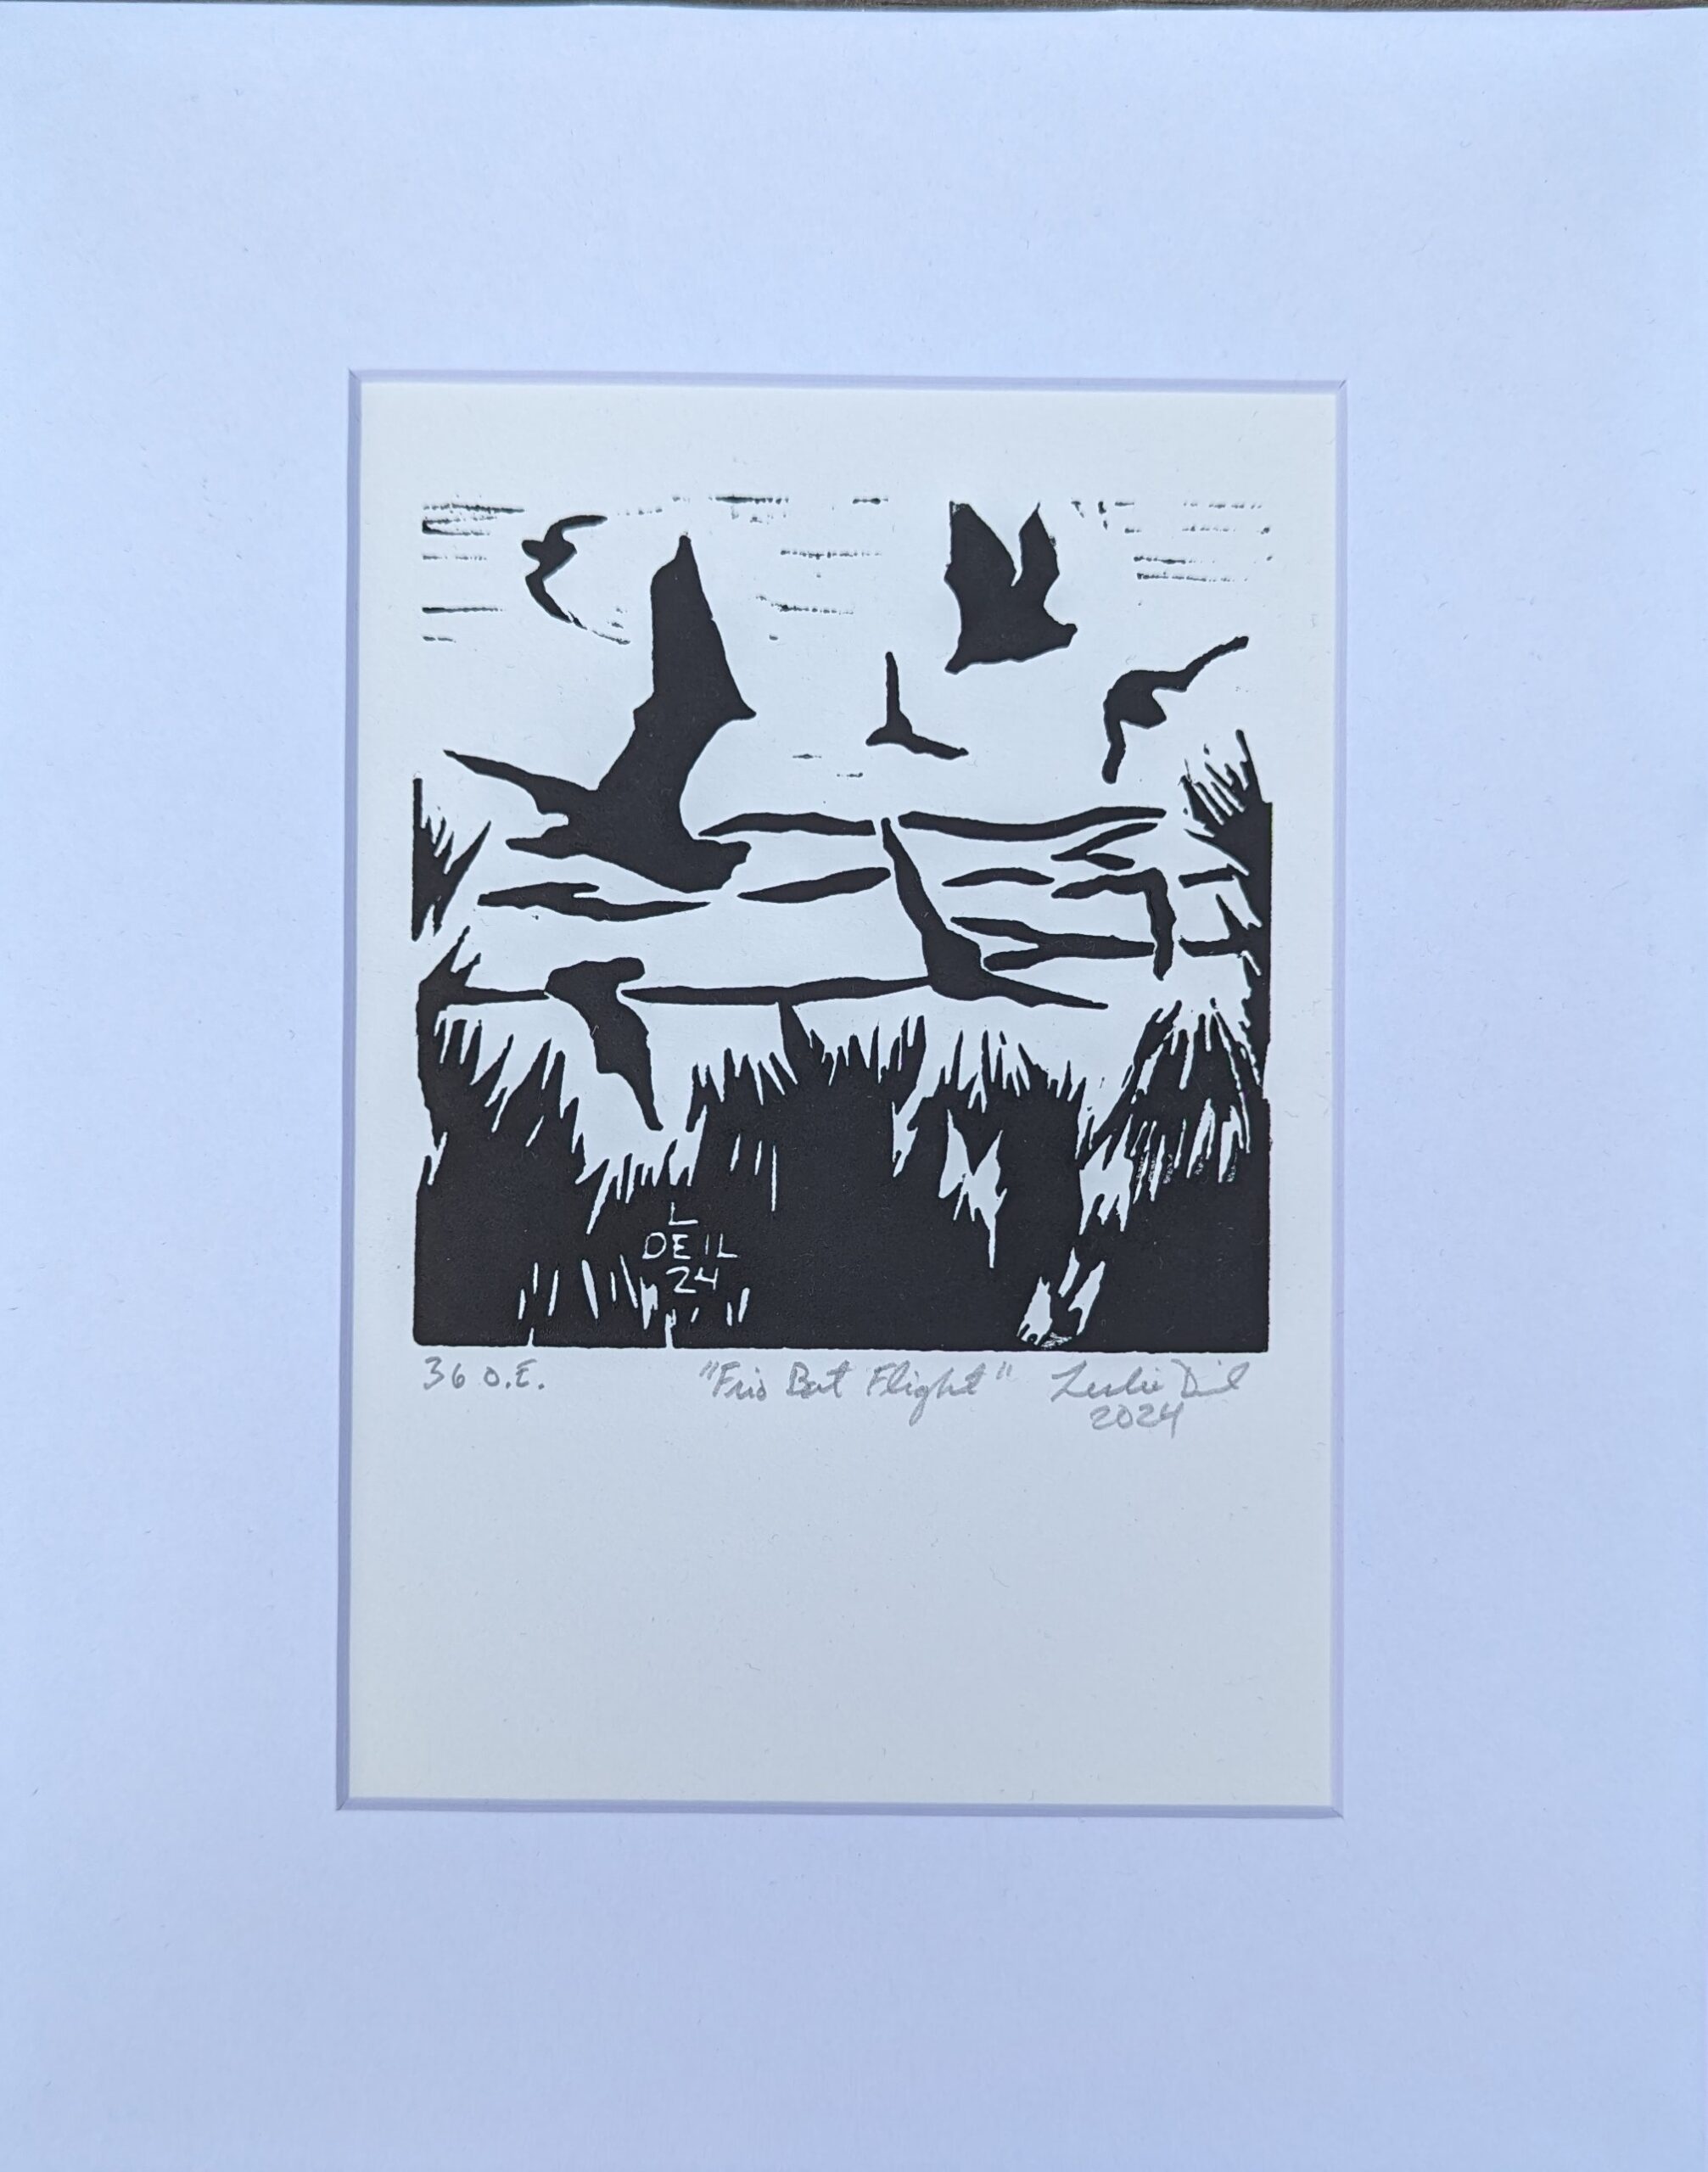 "Frio Bat Flight" - Linocut print by Artist Leslie Deil